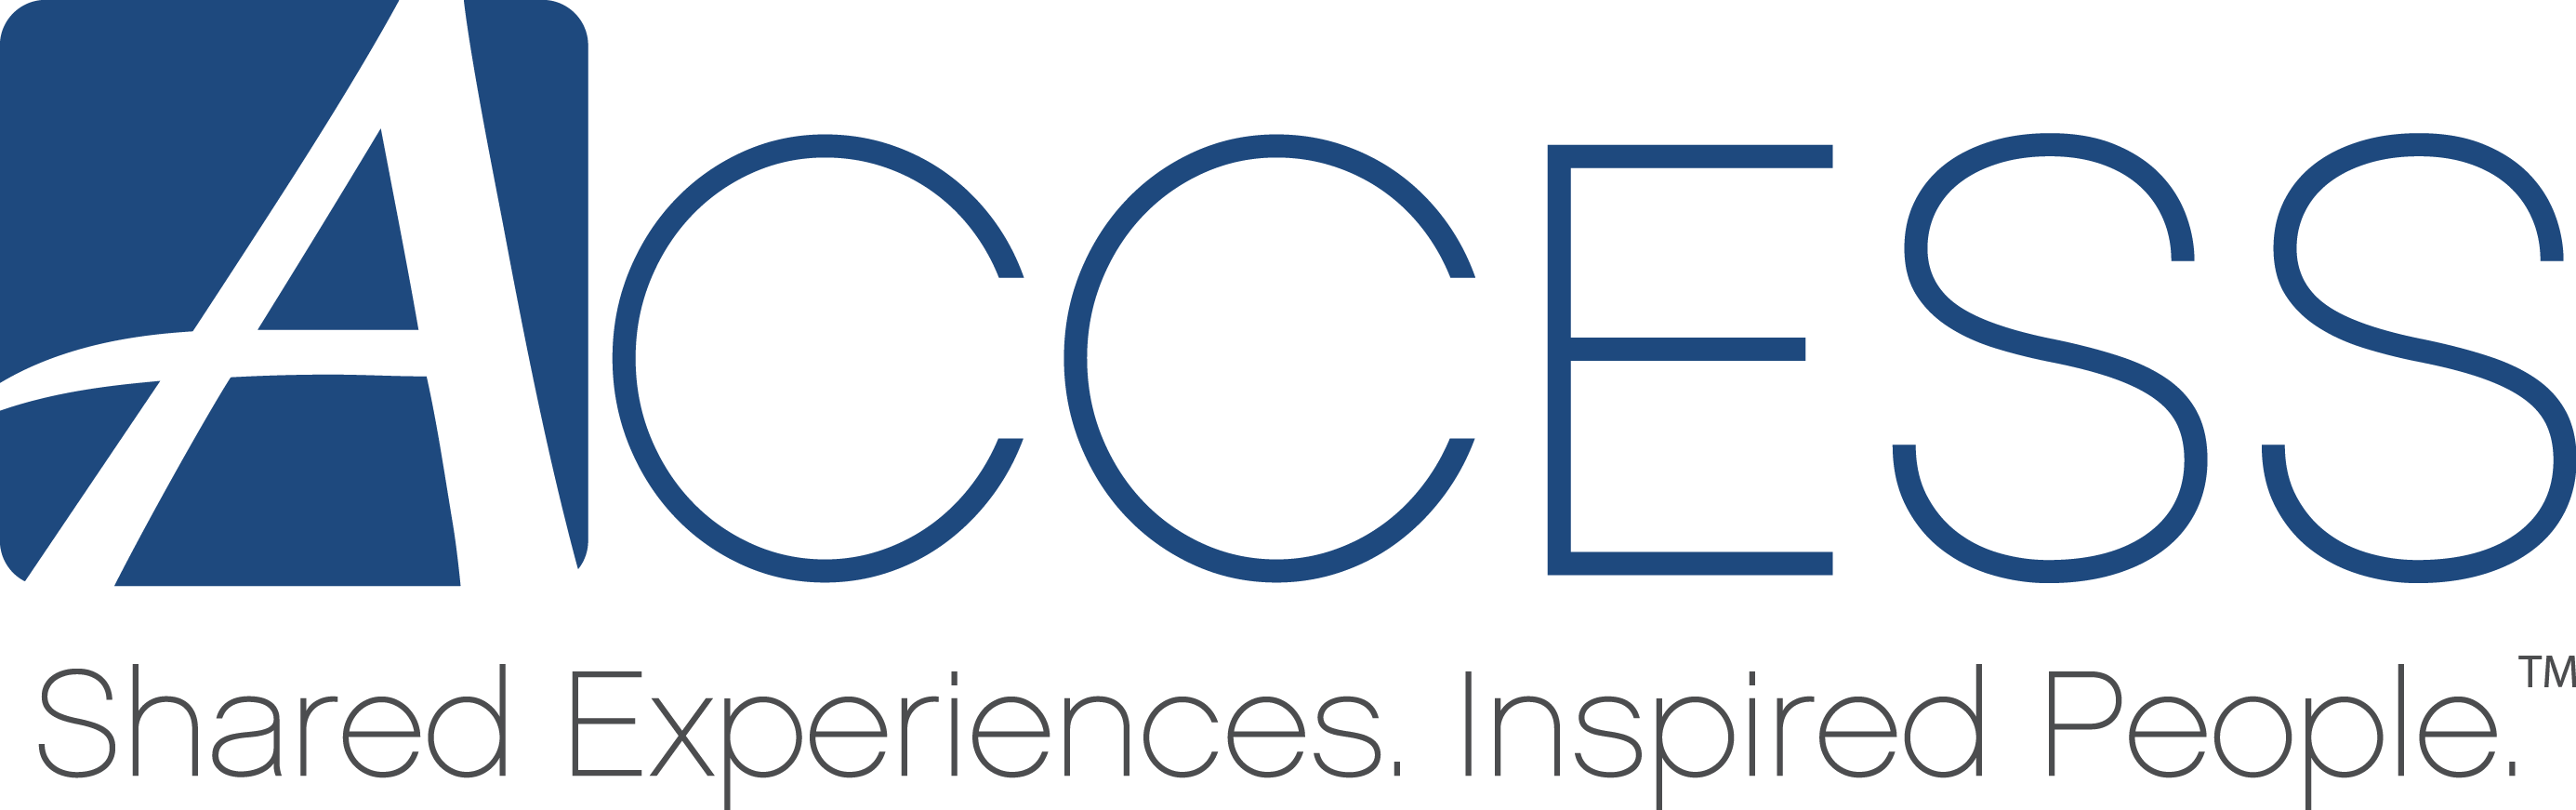 Логотип аксесс. WAVEACCESS лого. Destination services logo. Client logo.